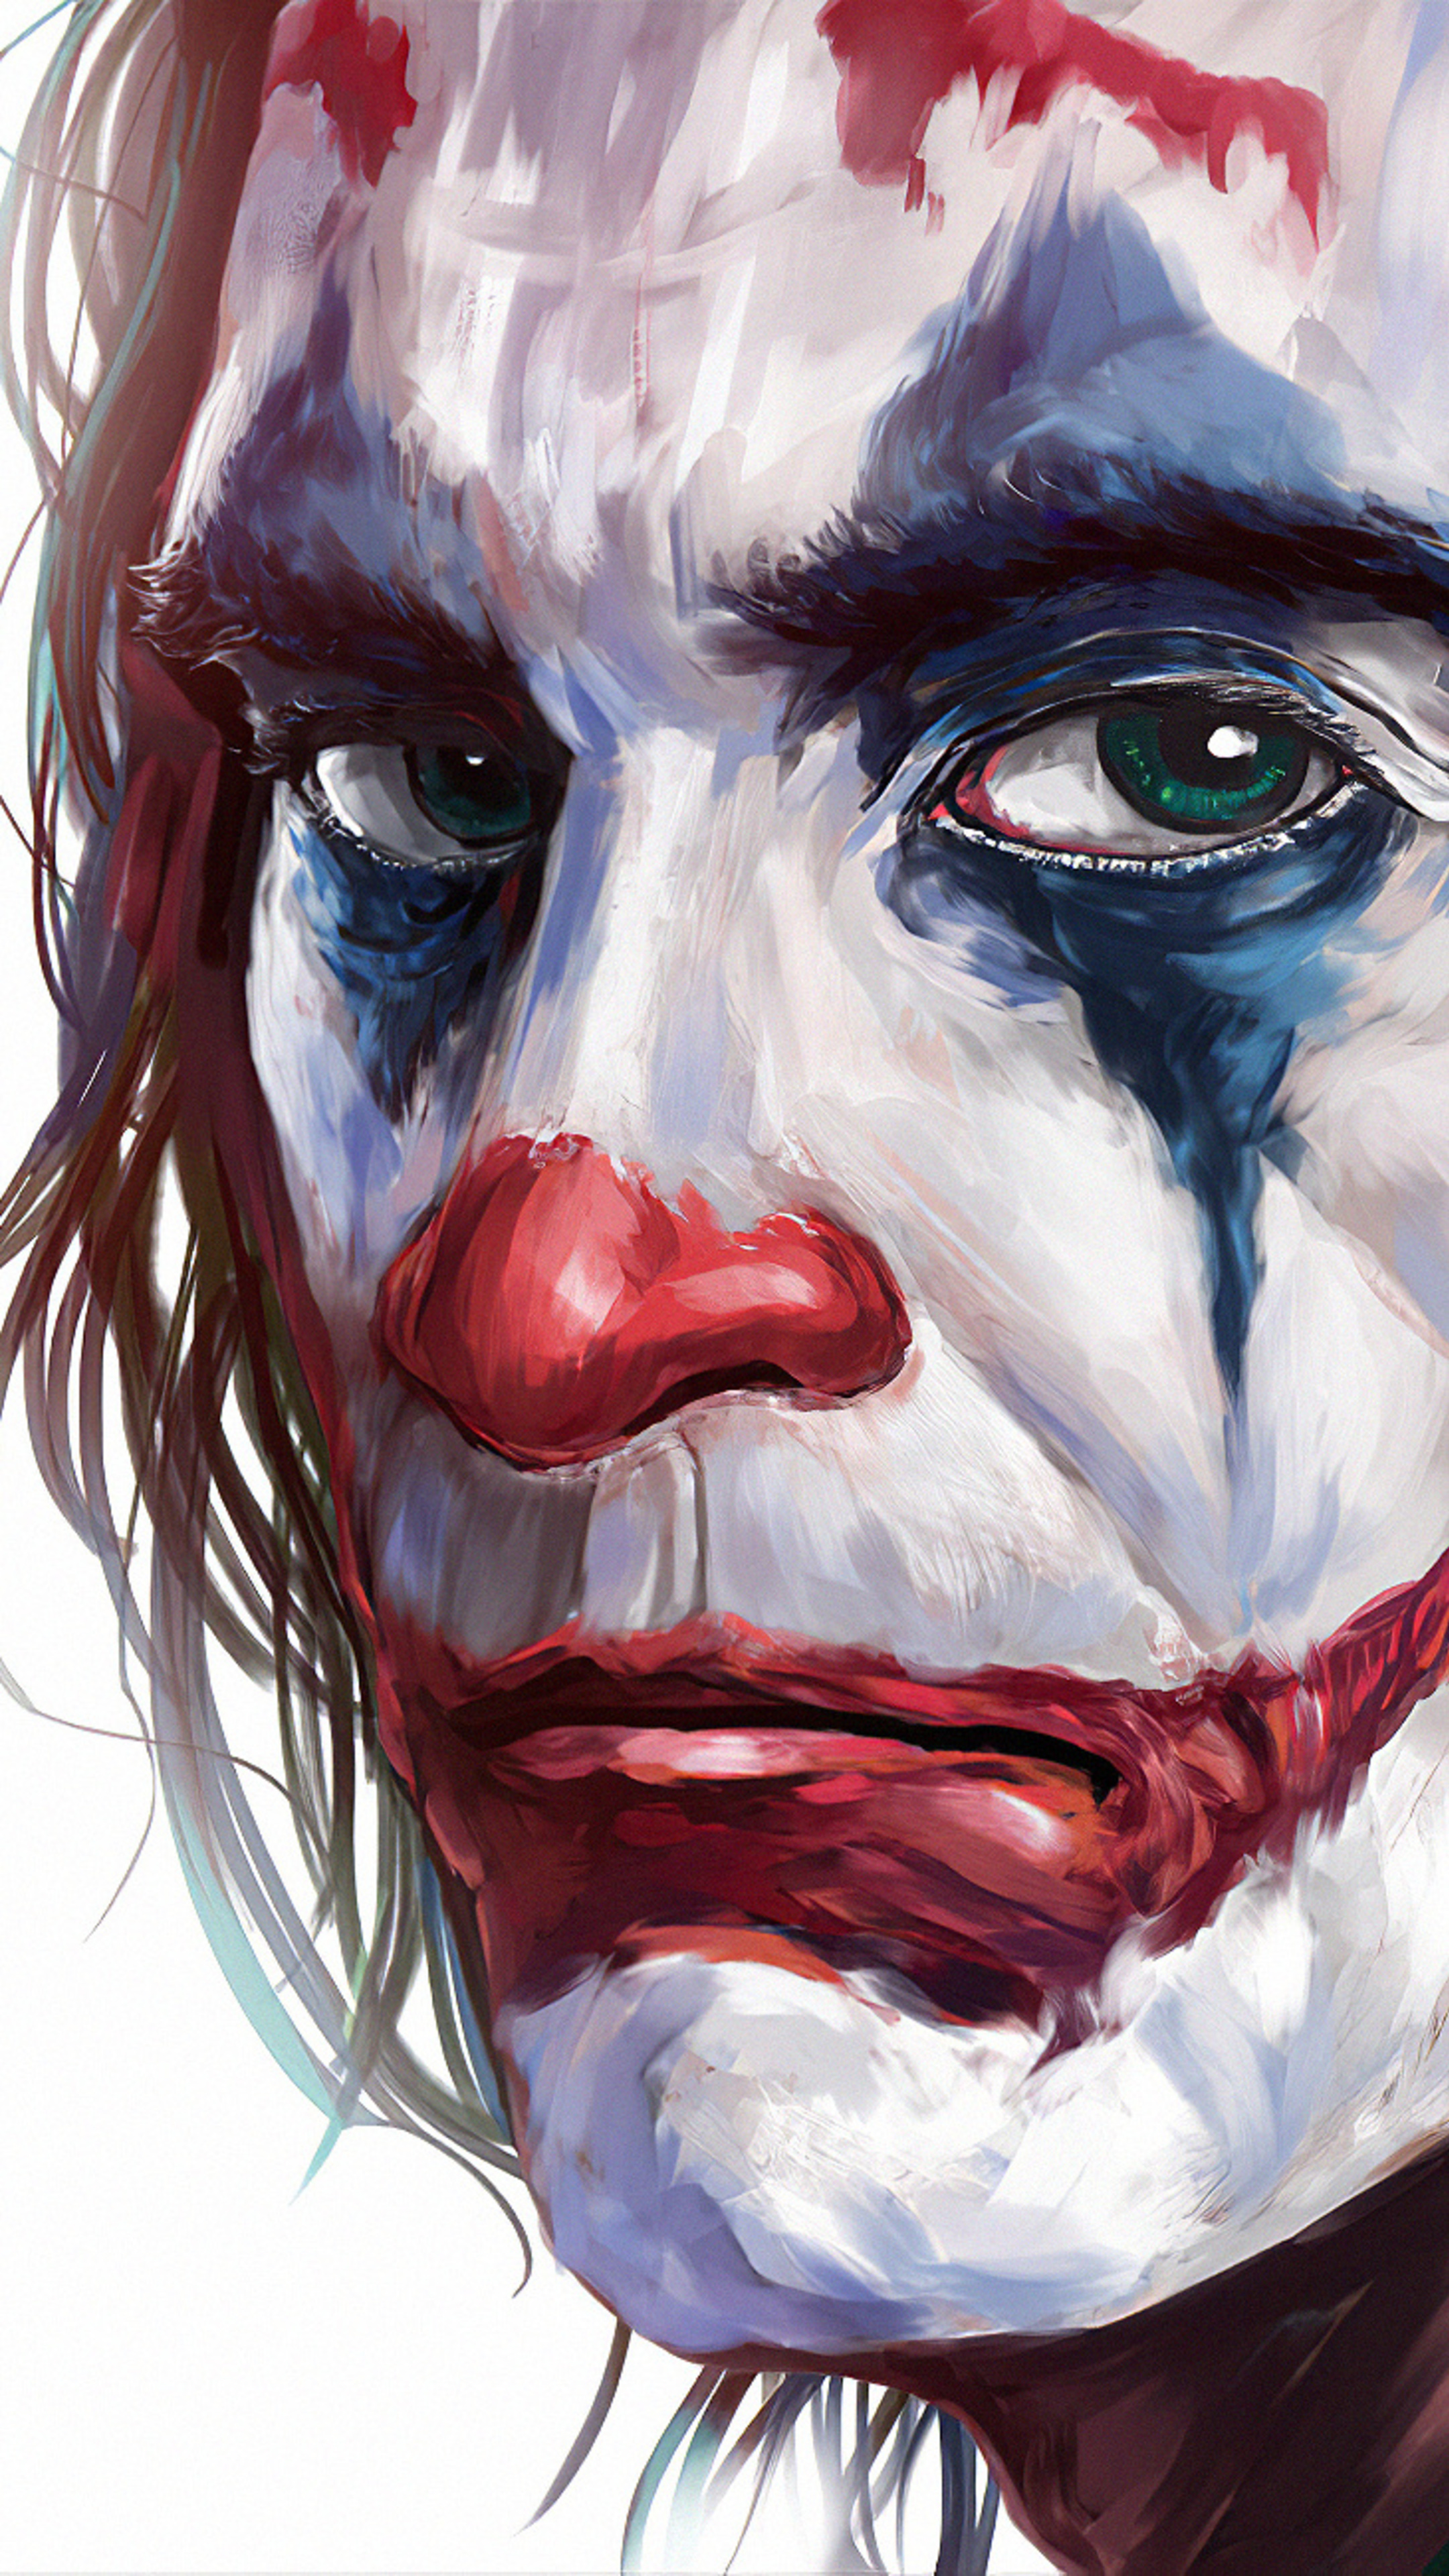 Joker Sad Face Sony Xperia X, XZ, Z5 Premium HD 4k Wallpaper, Image, Background, Photo and Picture